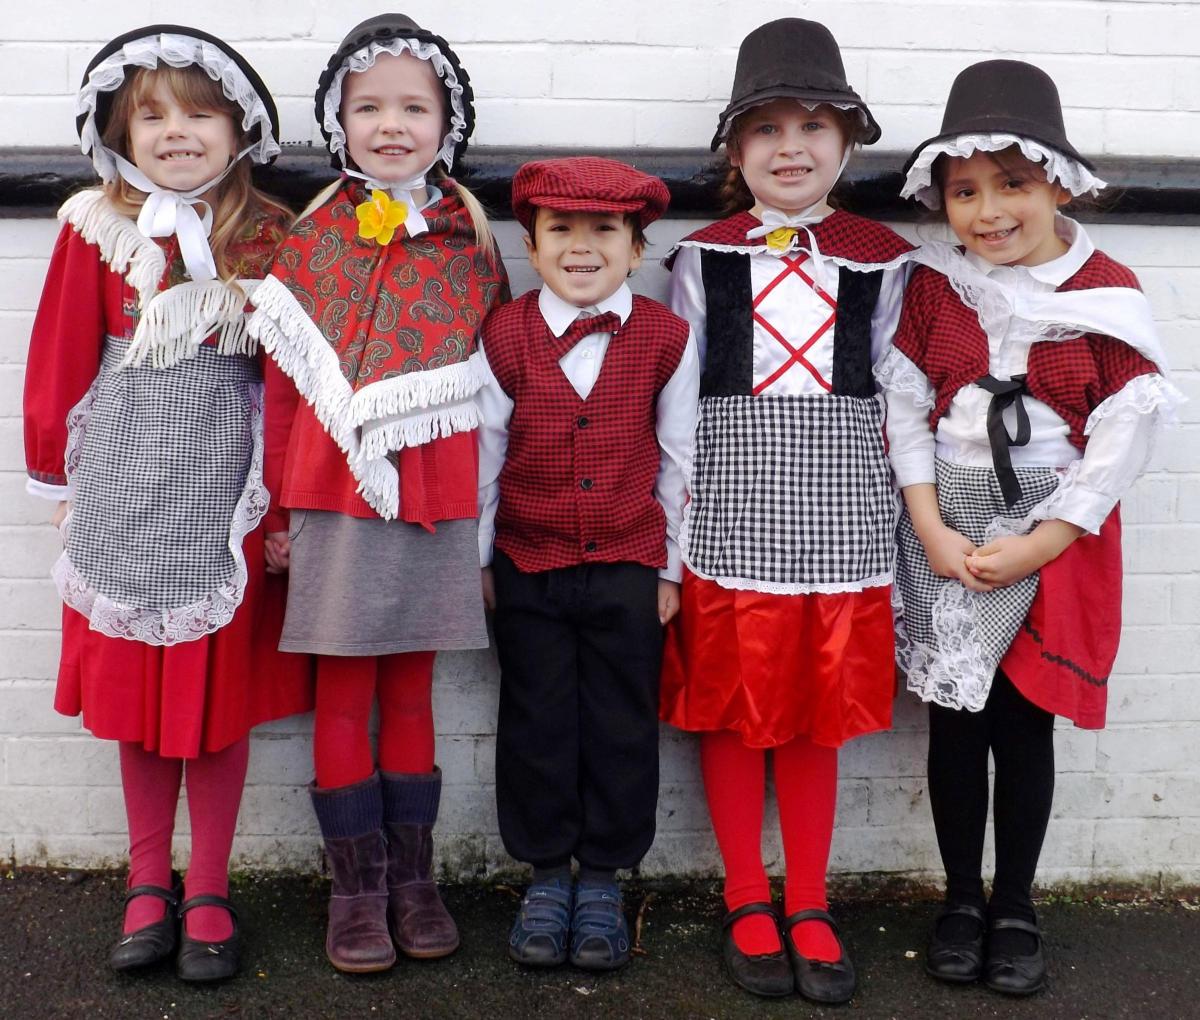 Orielton School marks St David's Day